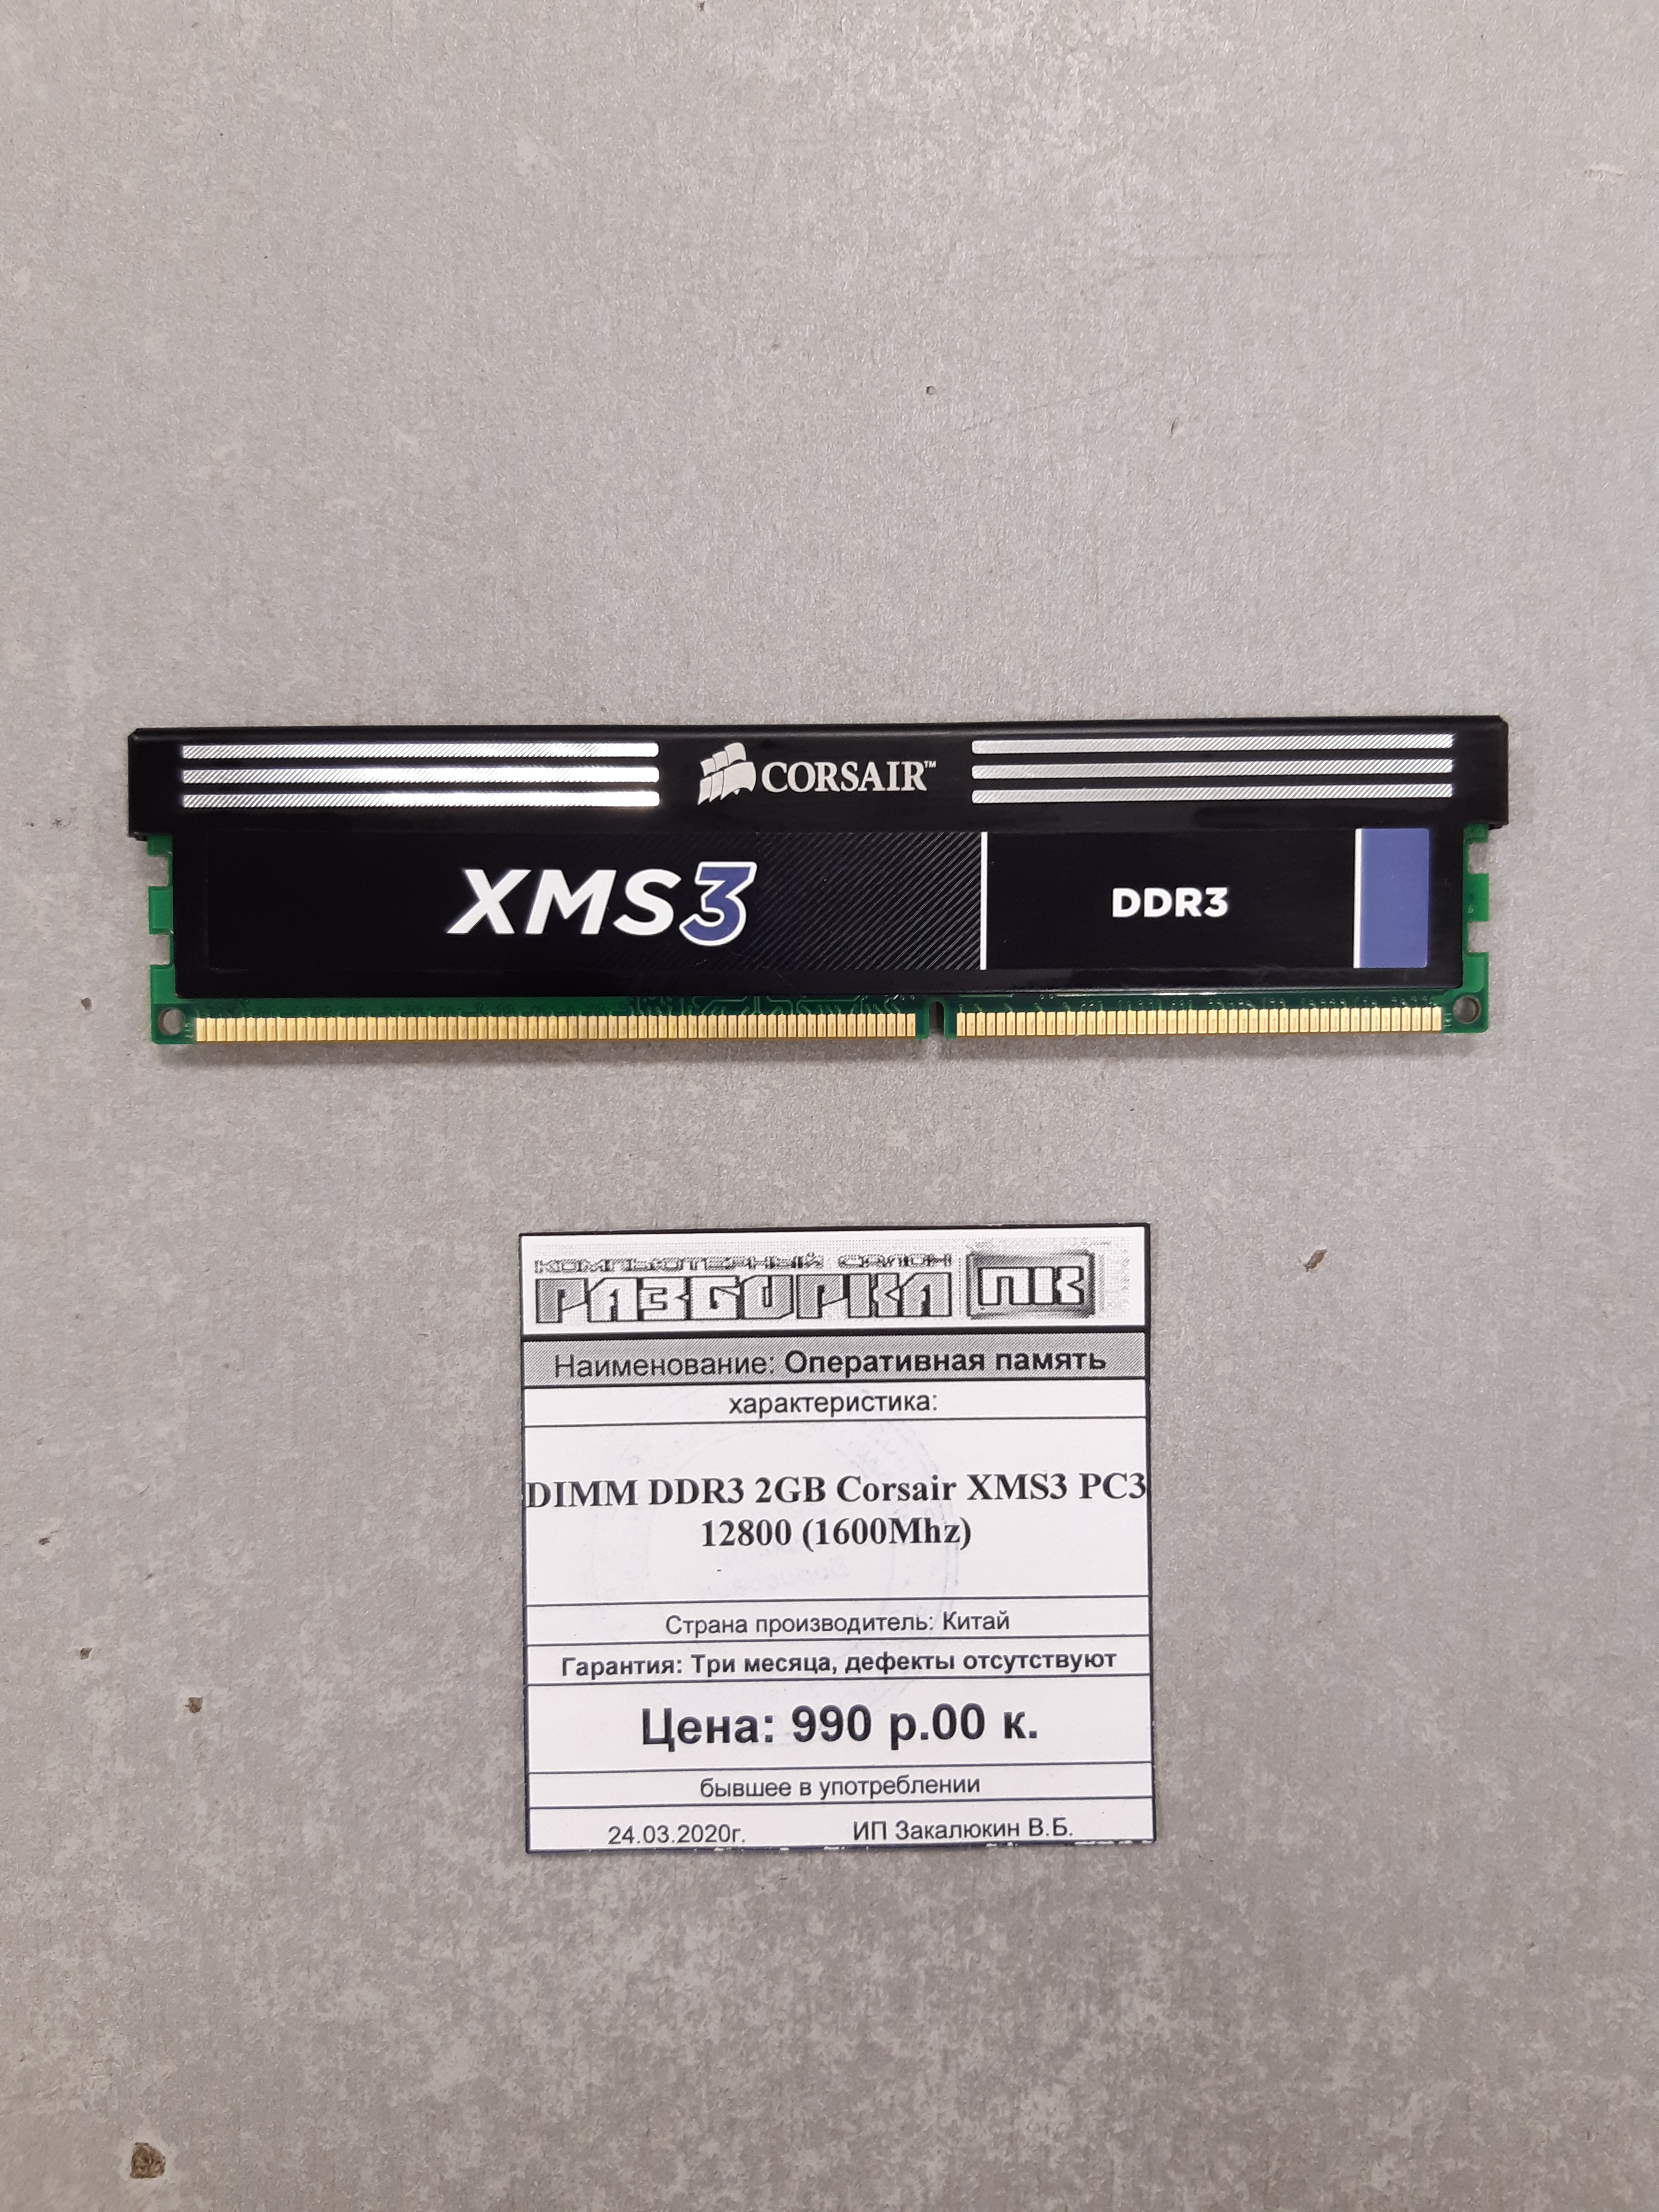 Оперативная память DIMM DDR-III 2GB Corsair XMS3 (1600Mhz)